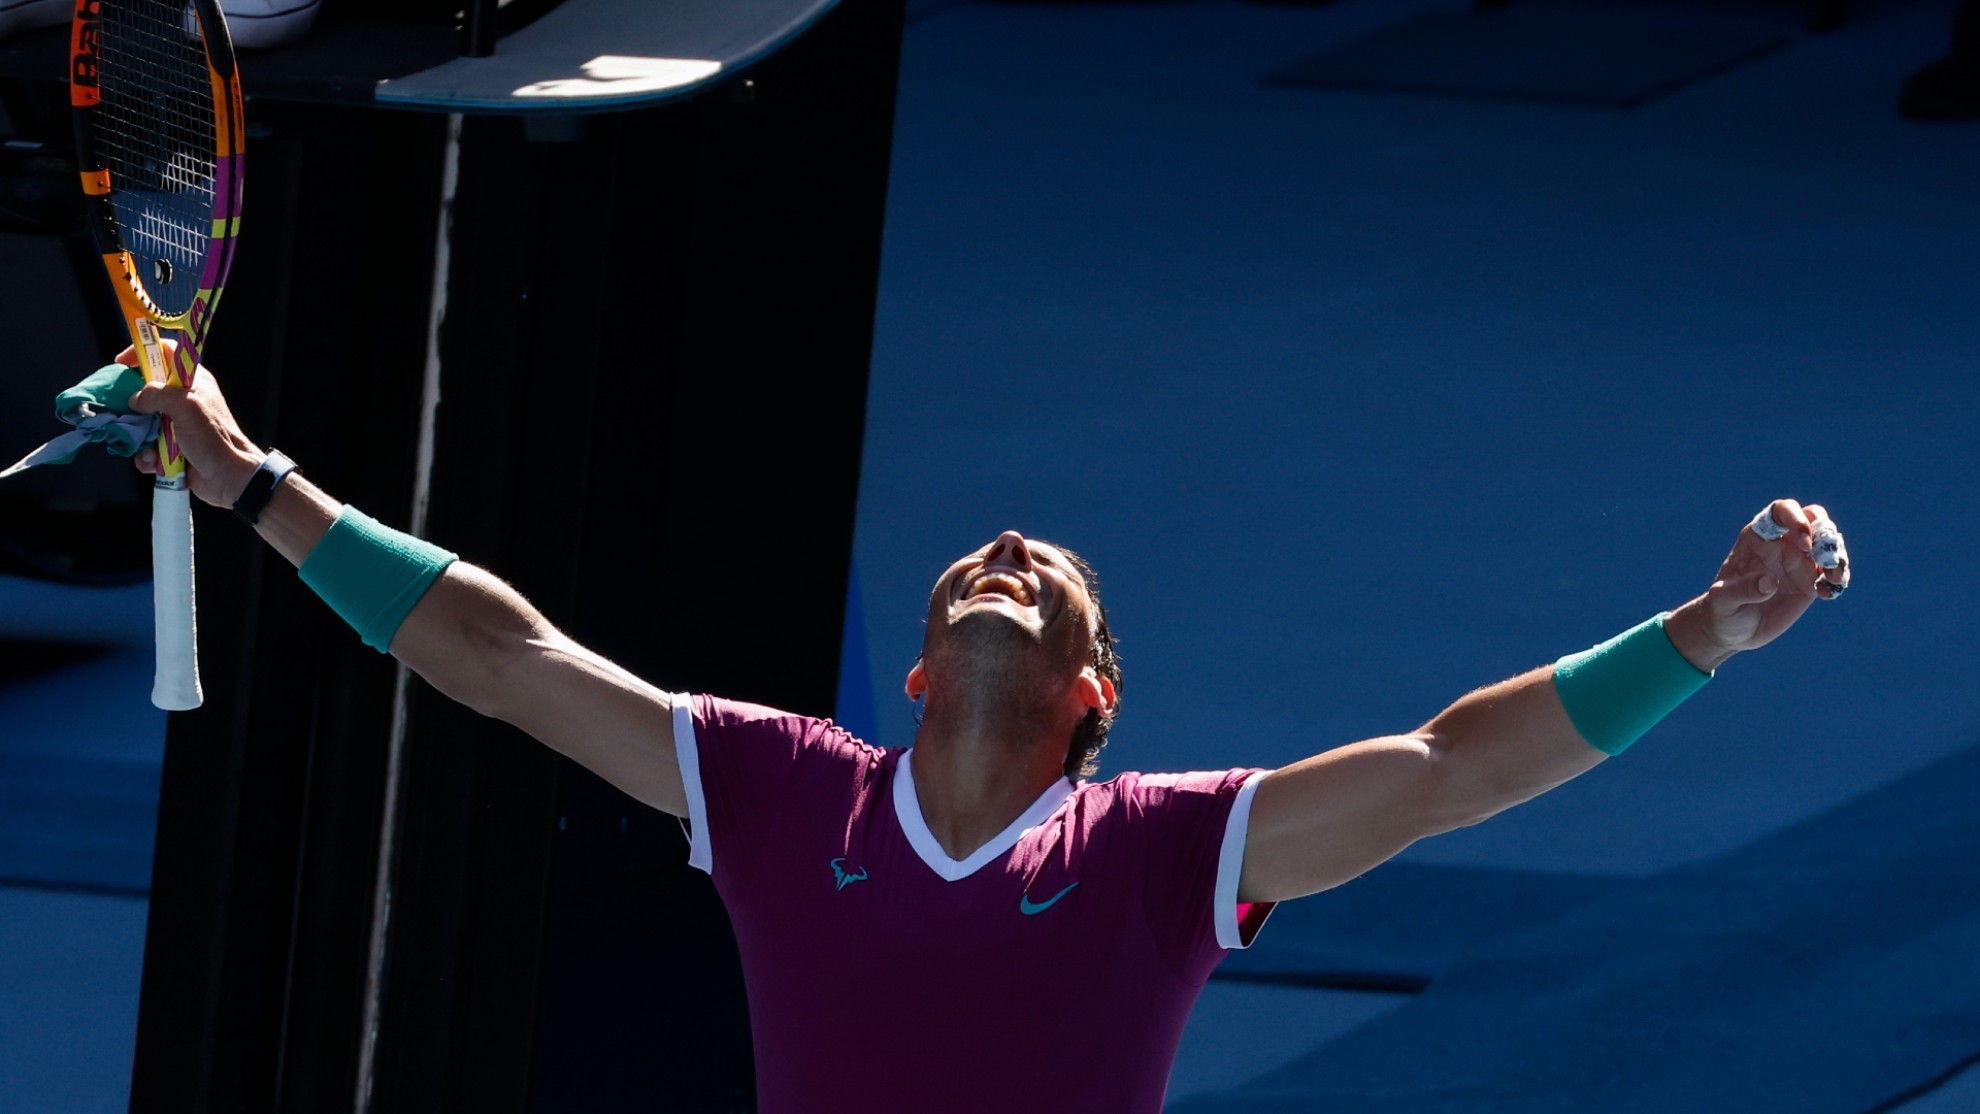 Nadal progresses to Australian Open quarter finals after beating Mannarino